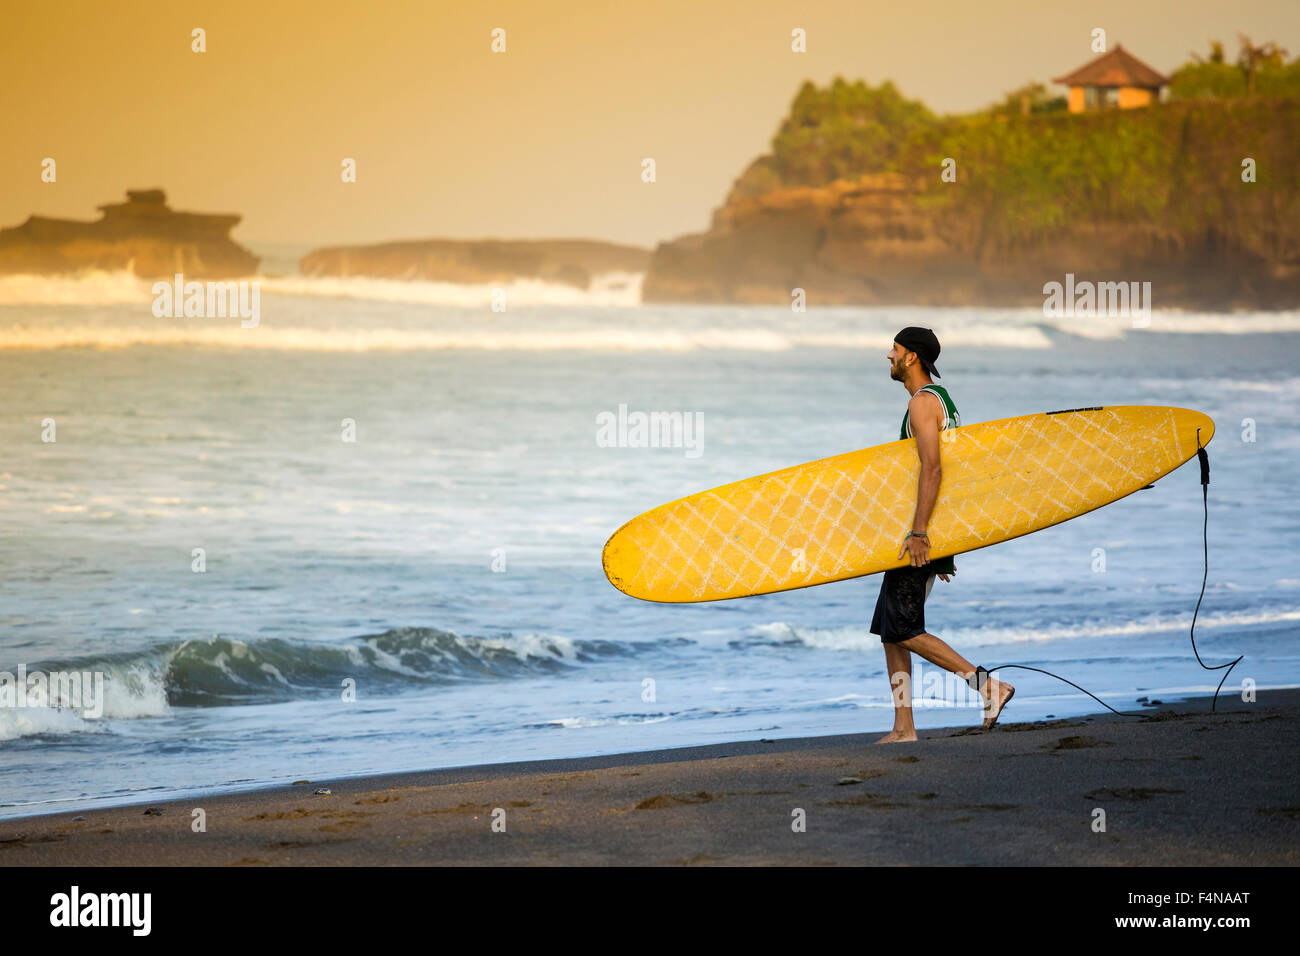 Indonesien, Bali, Surfer am Strand Stockfoto